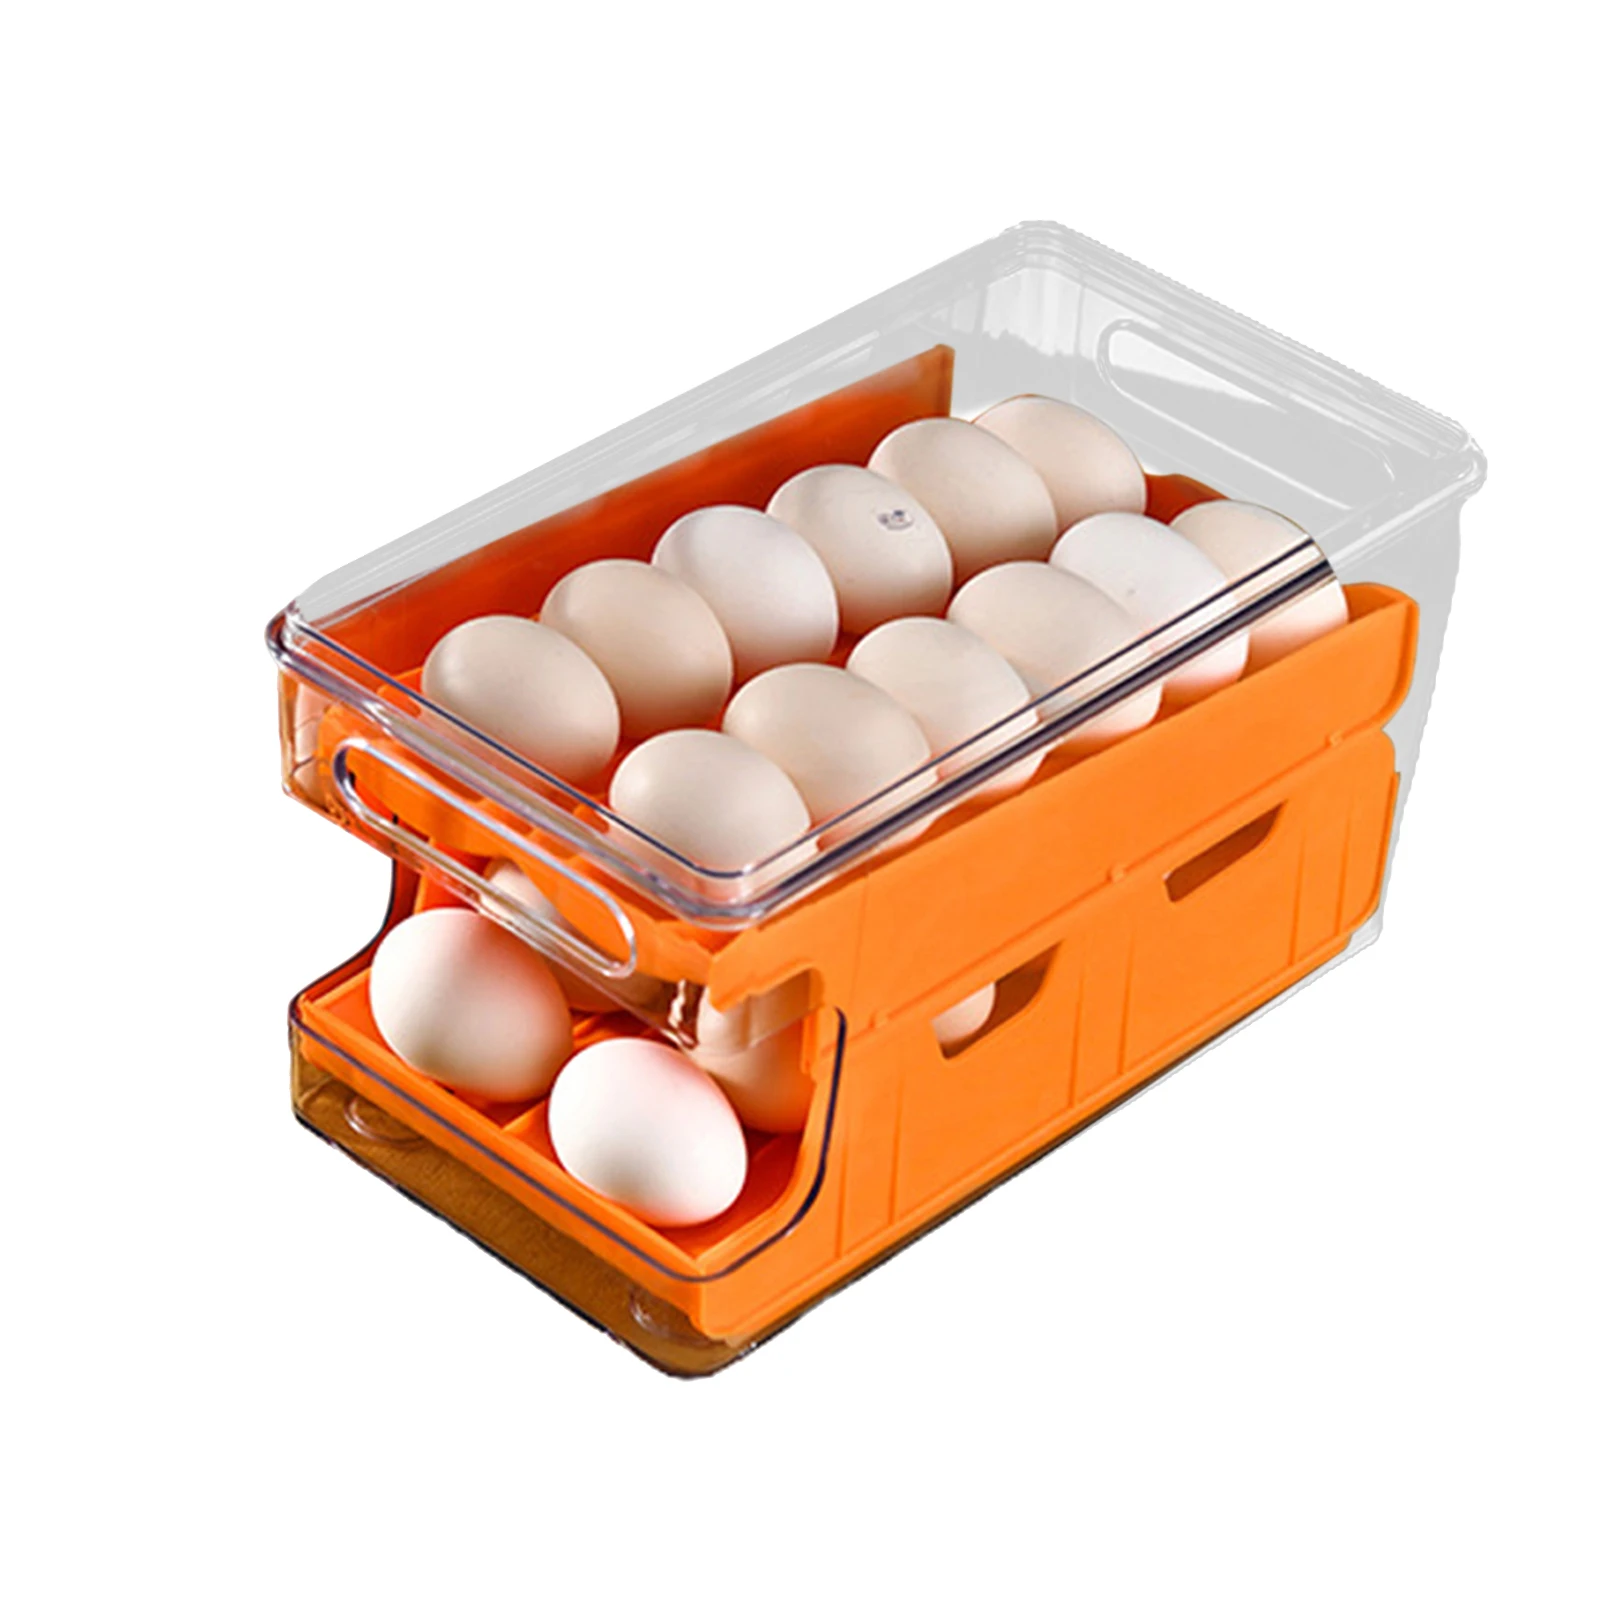 2-Layer BBG Transparent Pink Egg Container For Refrigerator Egg Holder Organizer With Lid Auto Rolling Egg Holder For Storage Large Capacity 36 Count Egg Dispenser Storage 